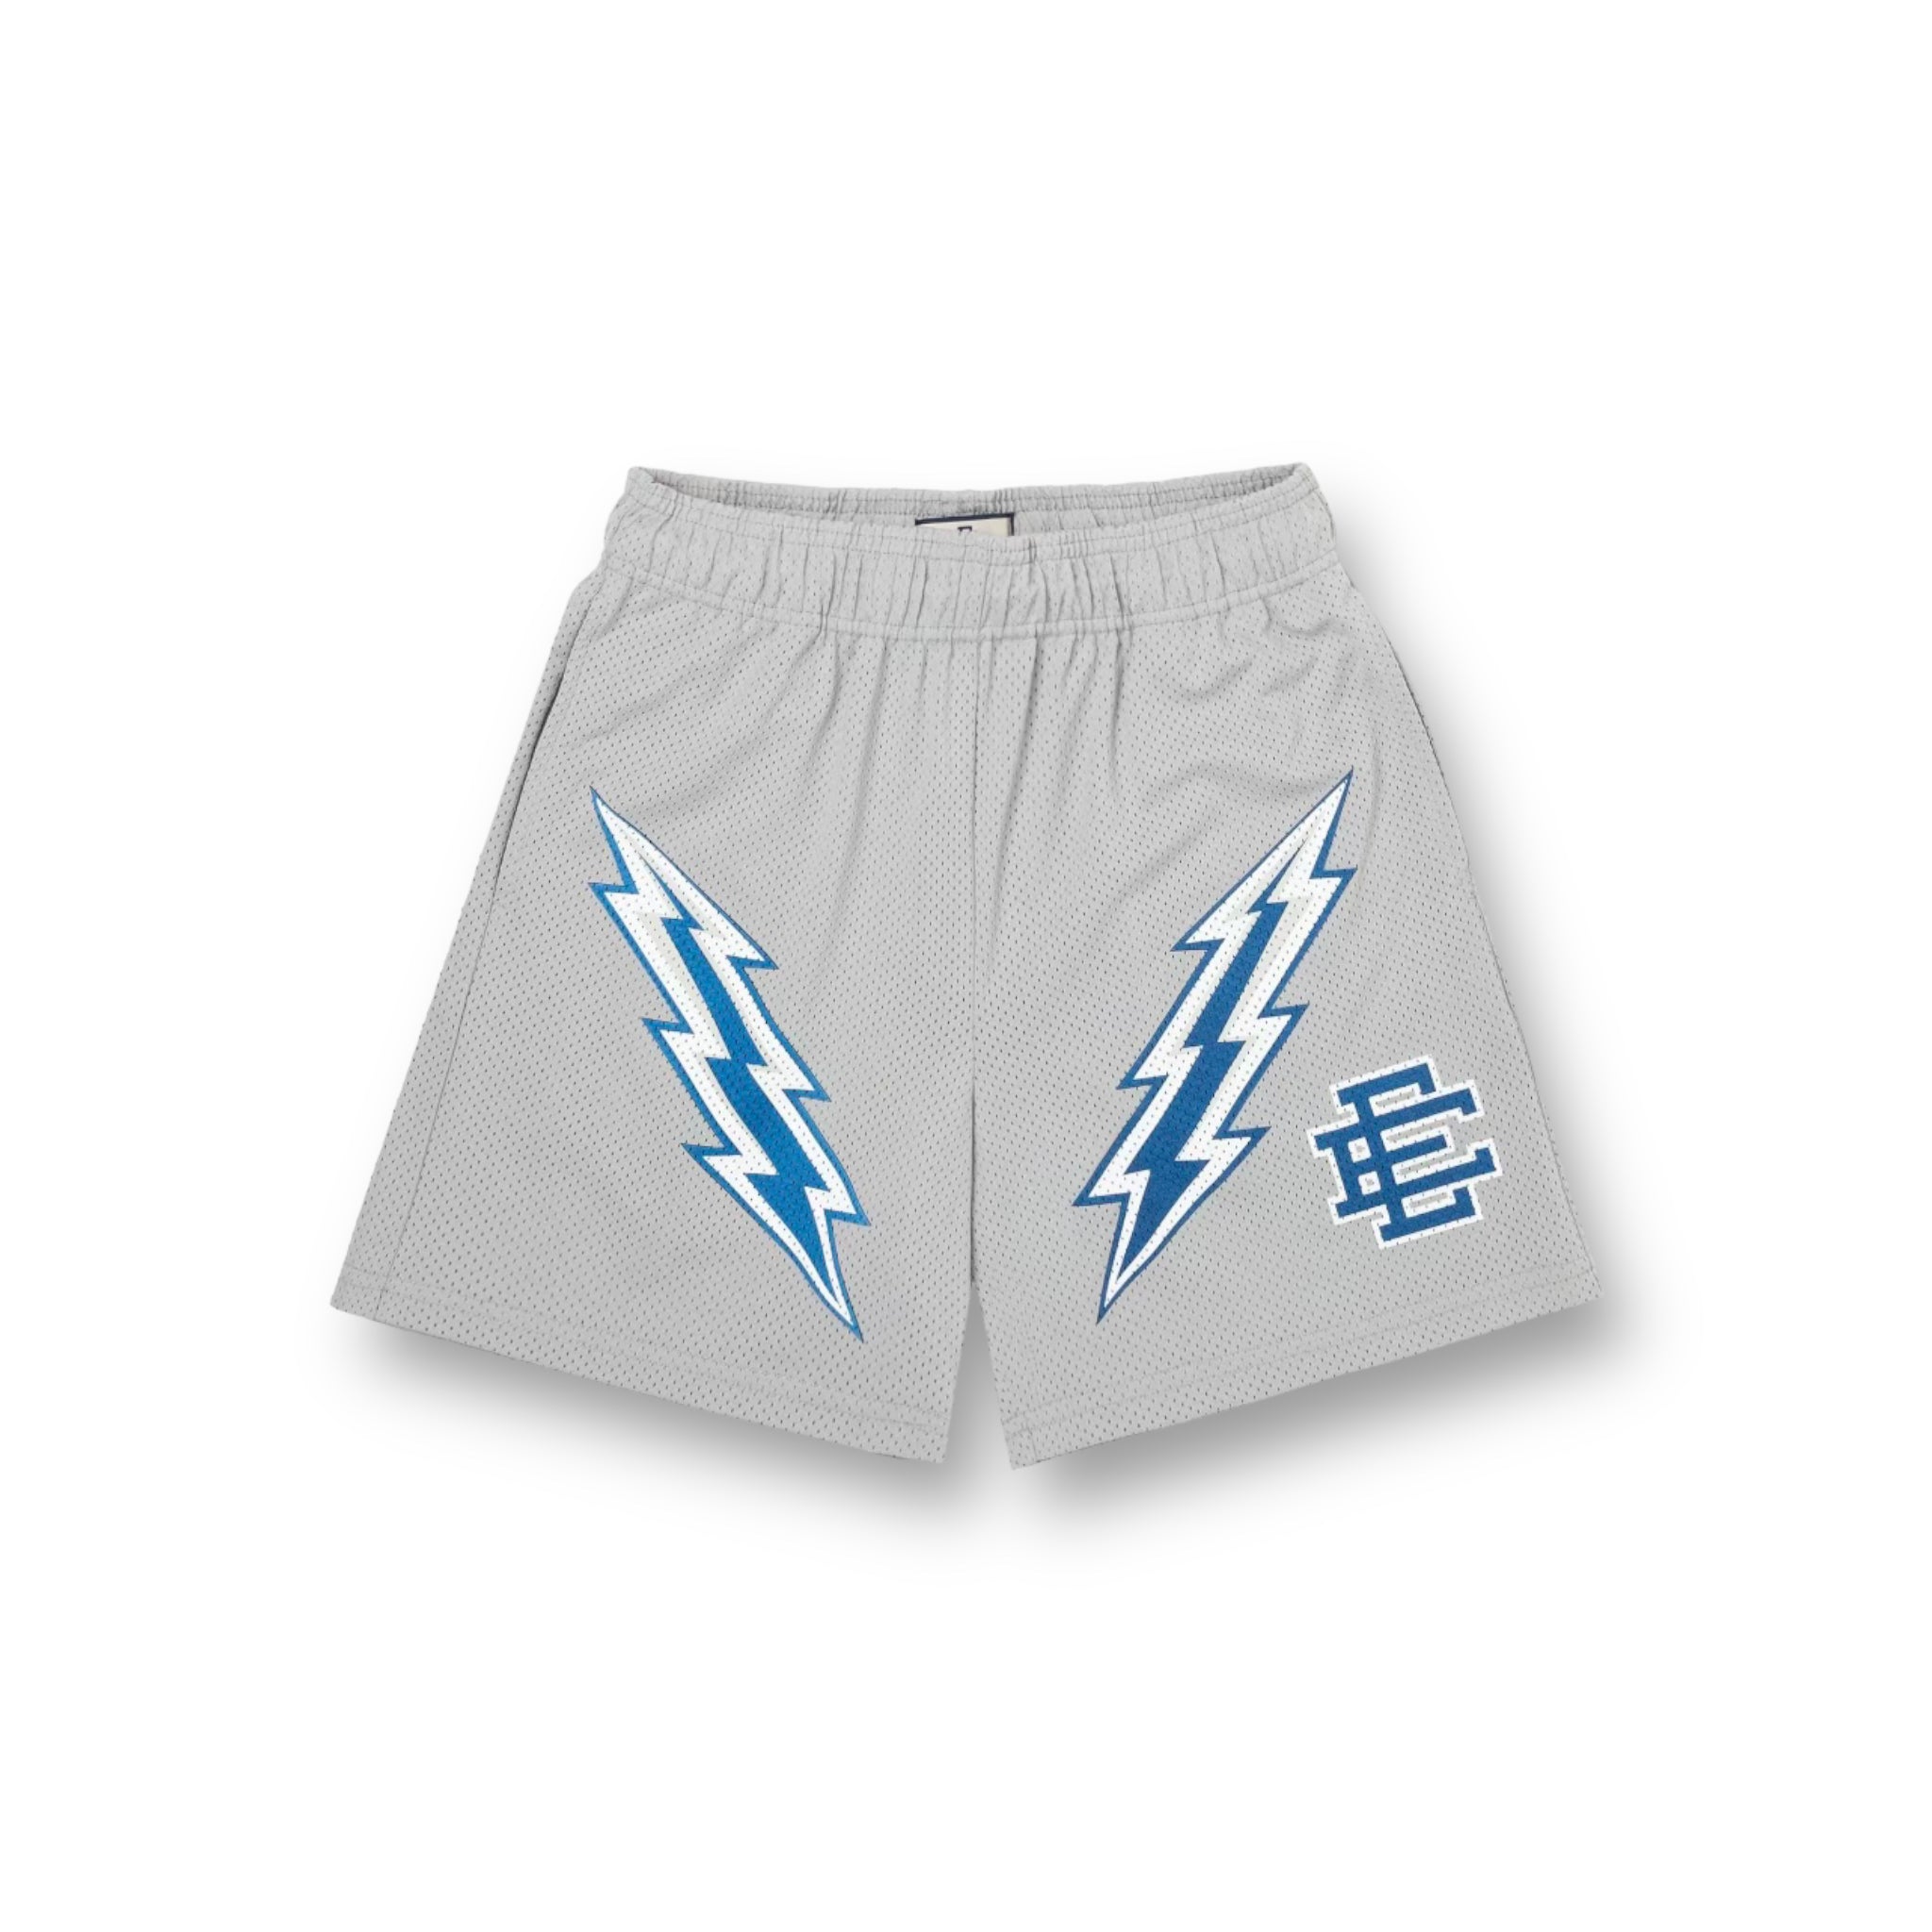 Eric Emanuel Grey/Blue/White Bolt Shorts